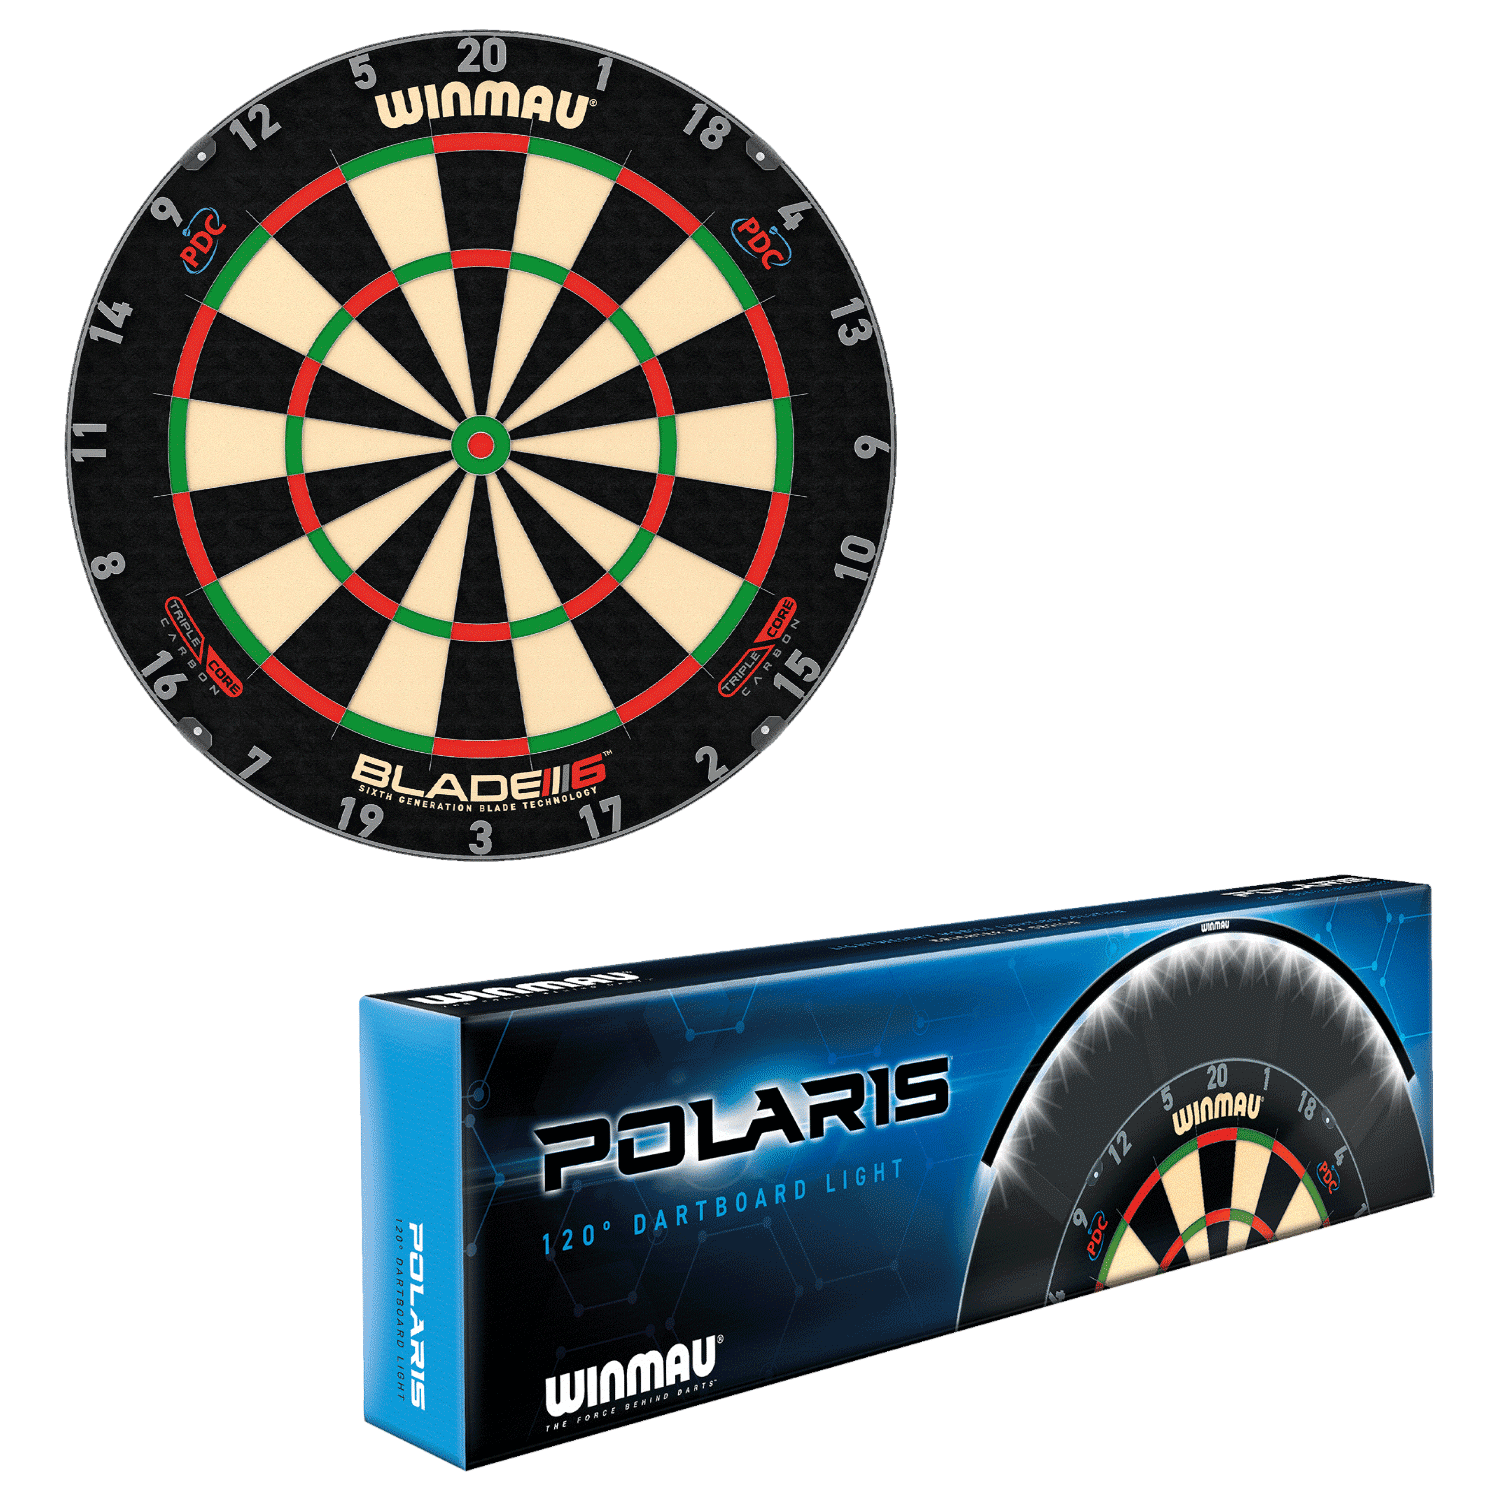 Winmau Blade 6 Triple Core Dartboard mit Polaris Beleuchtung Set